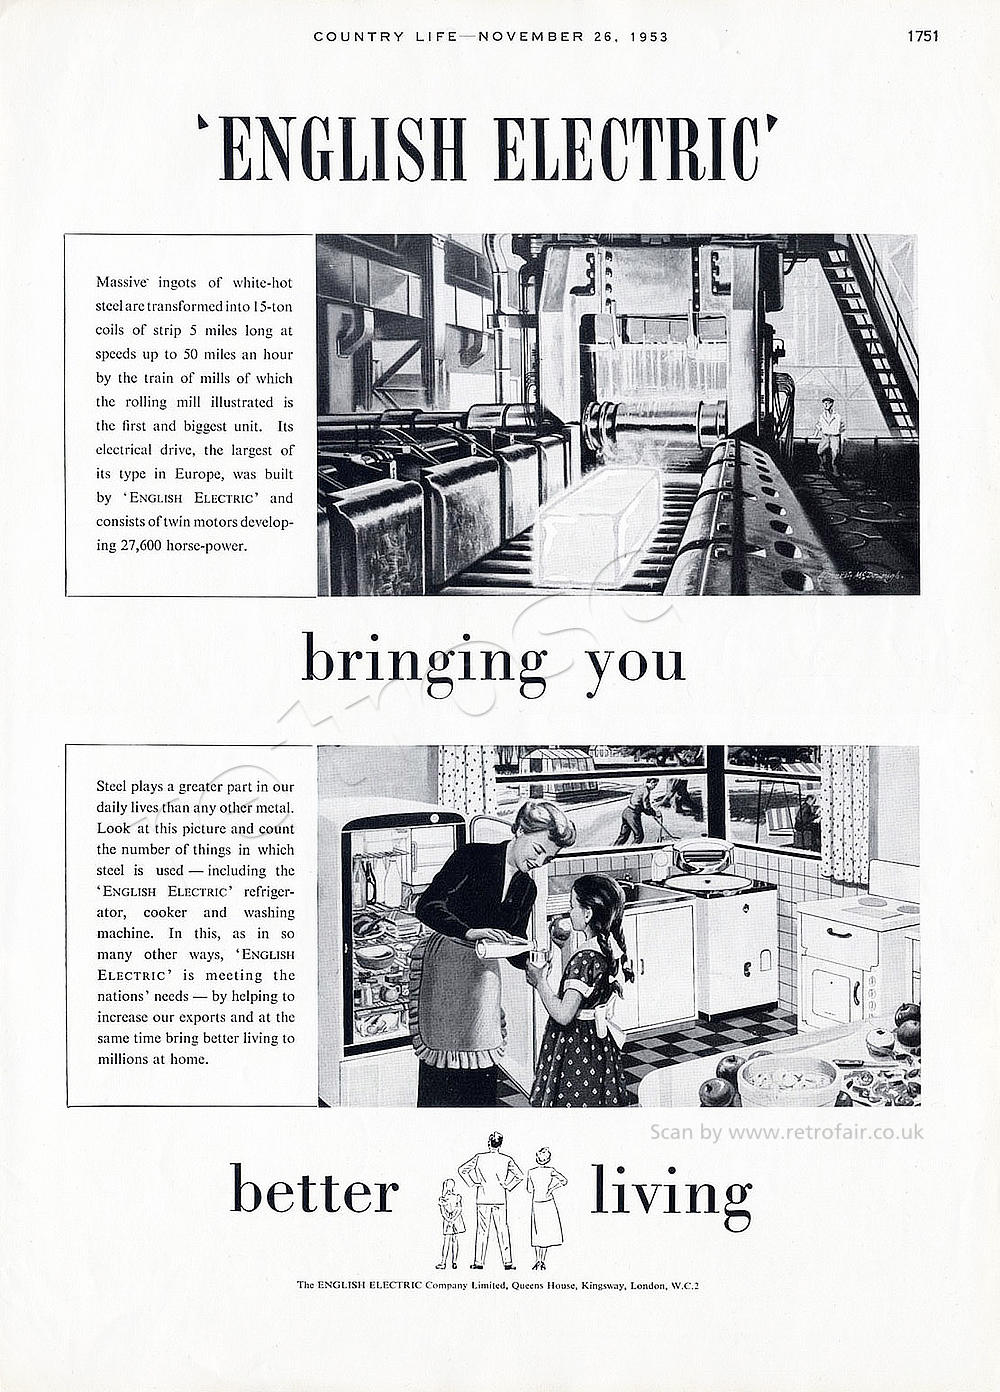 1953 vintage English Electric advert